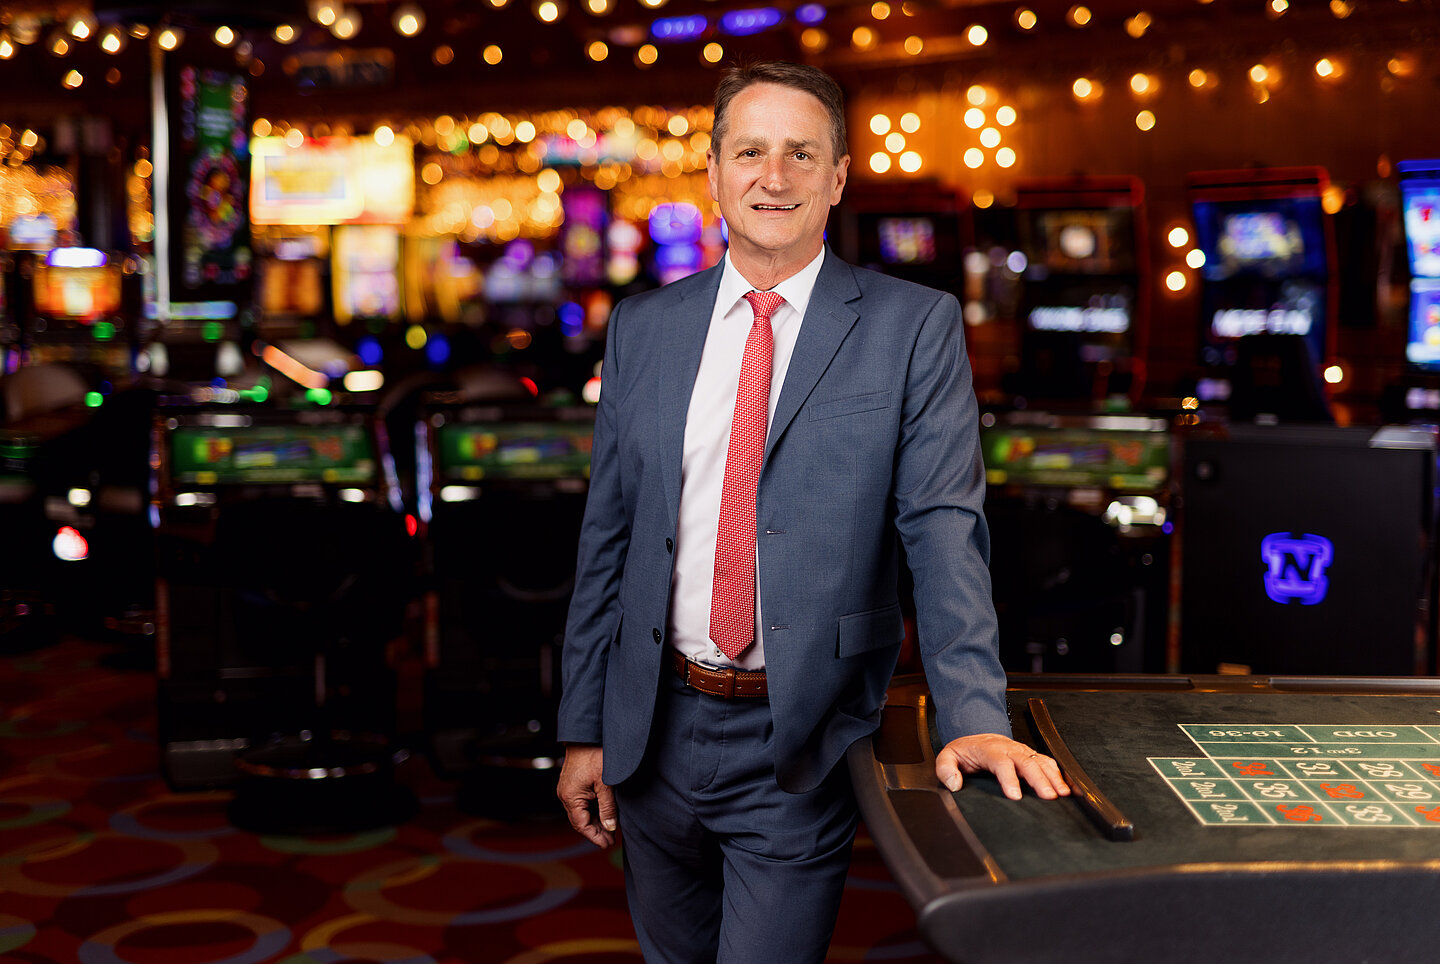 Senior Casino Manager Gerald Golker